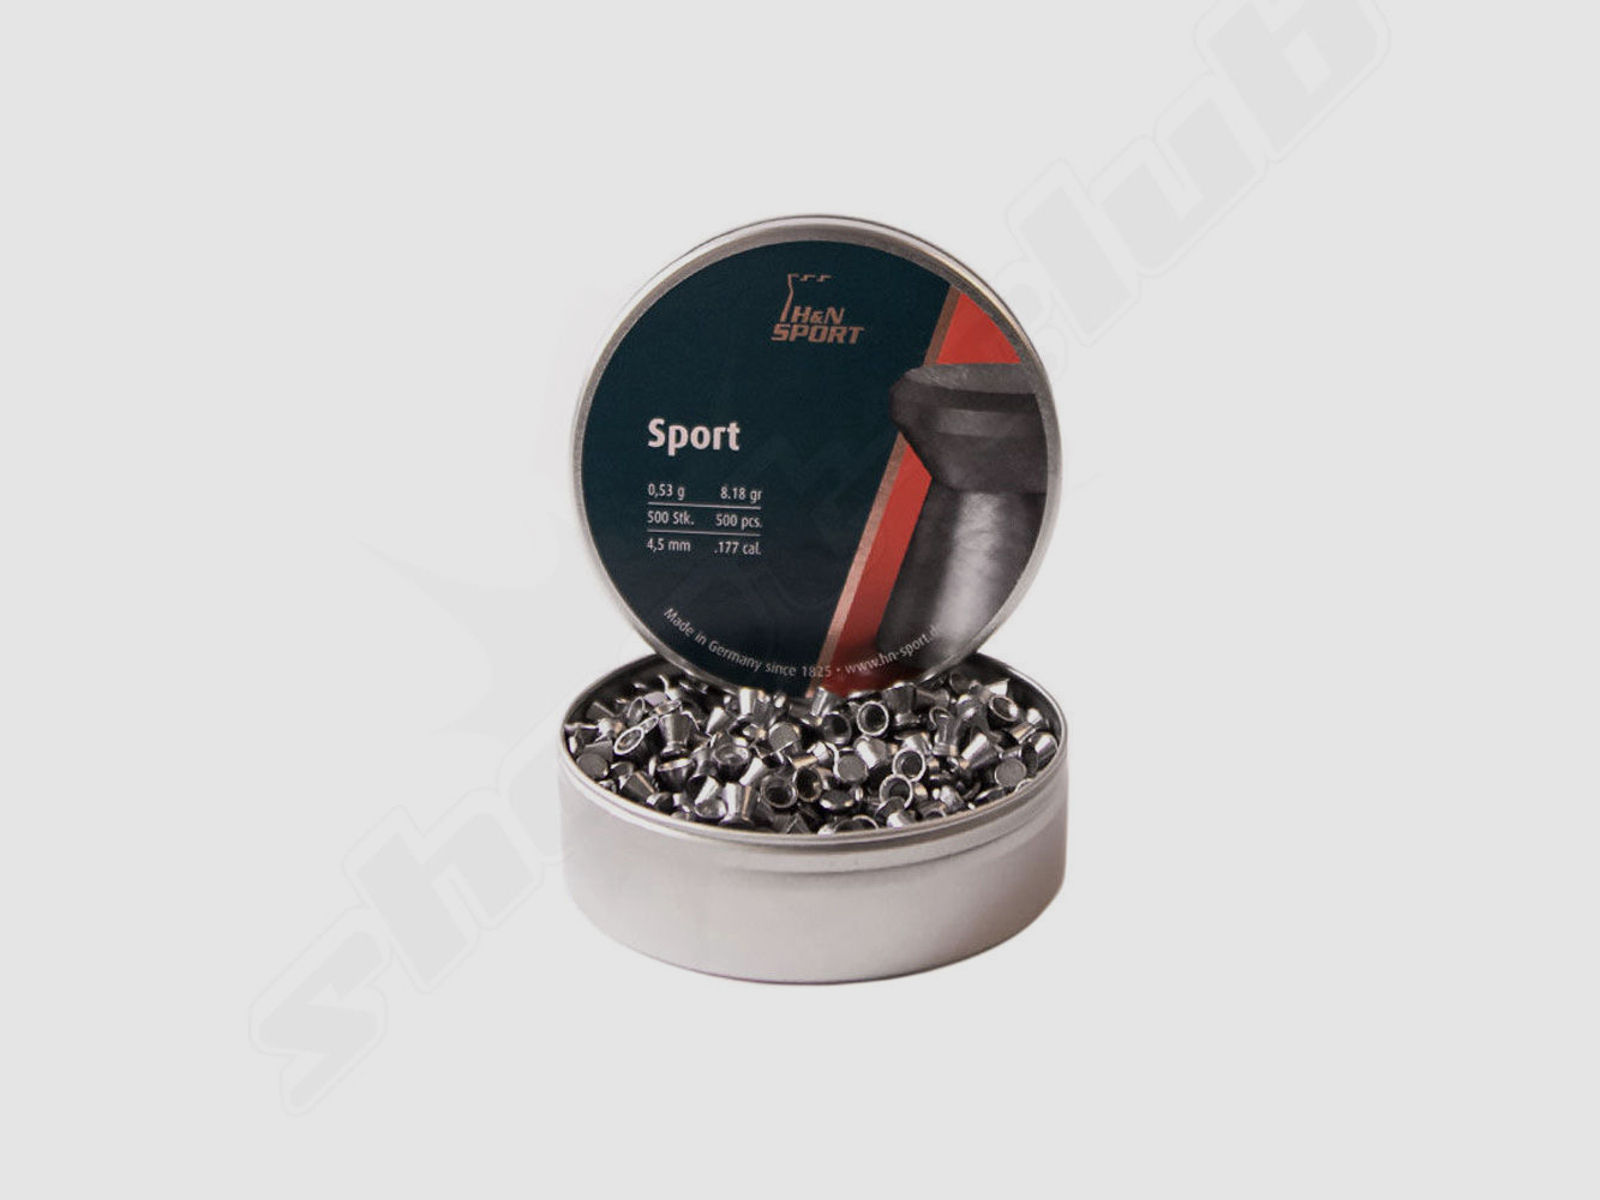 H&N Sport Flachkopf Diabolos glatt 4,5mm 0,53g 500 Stück